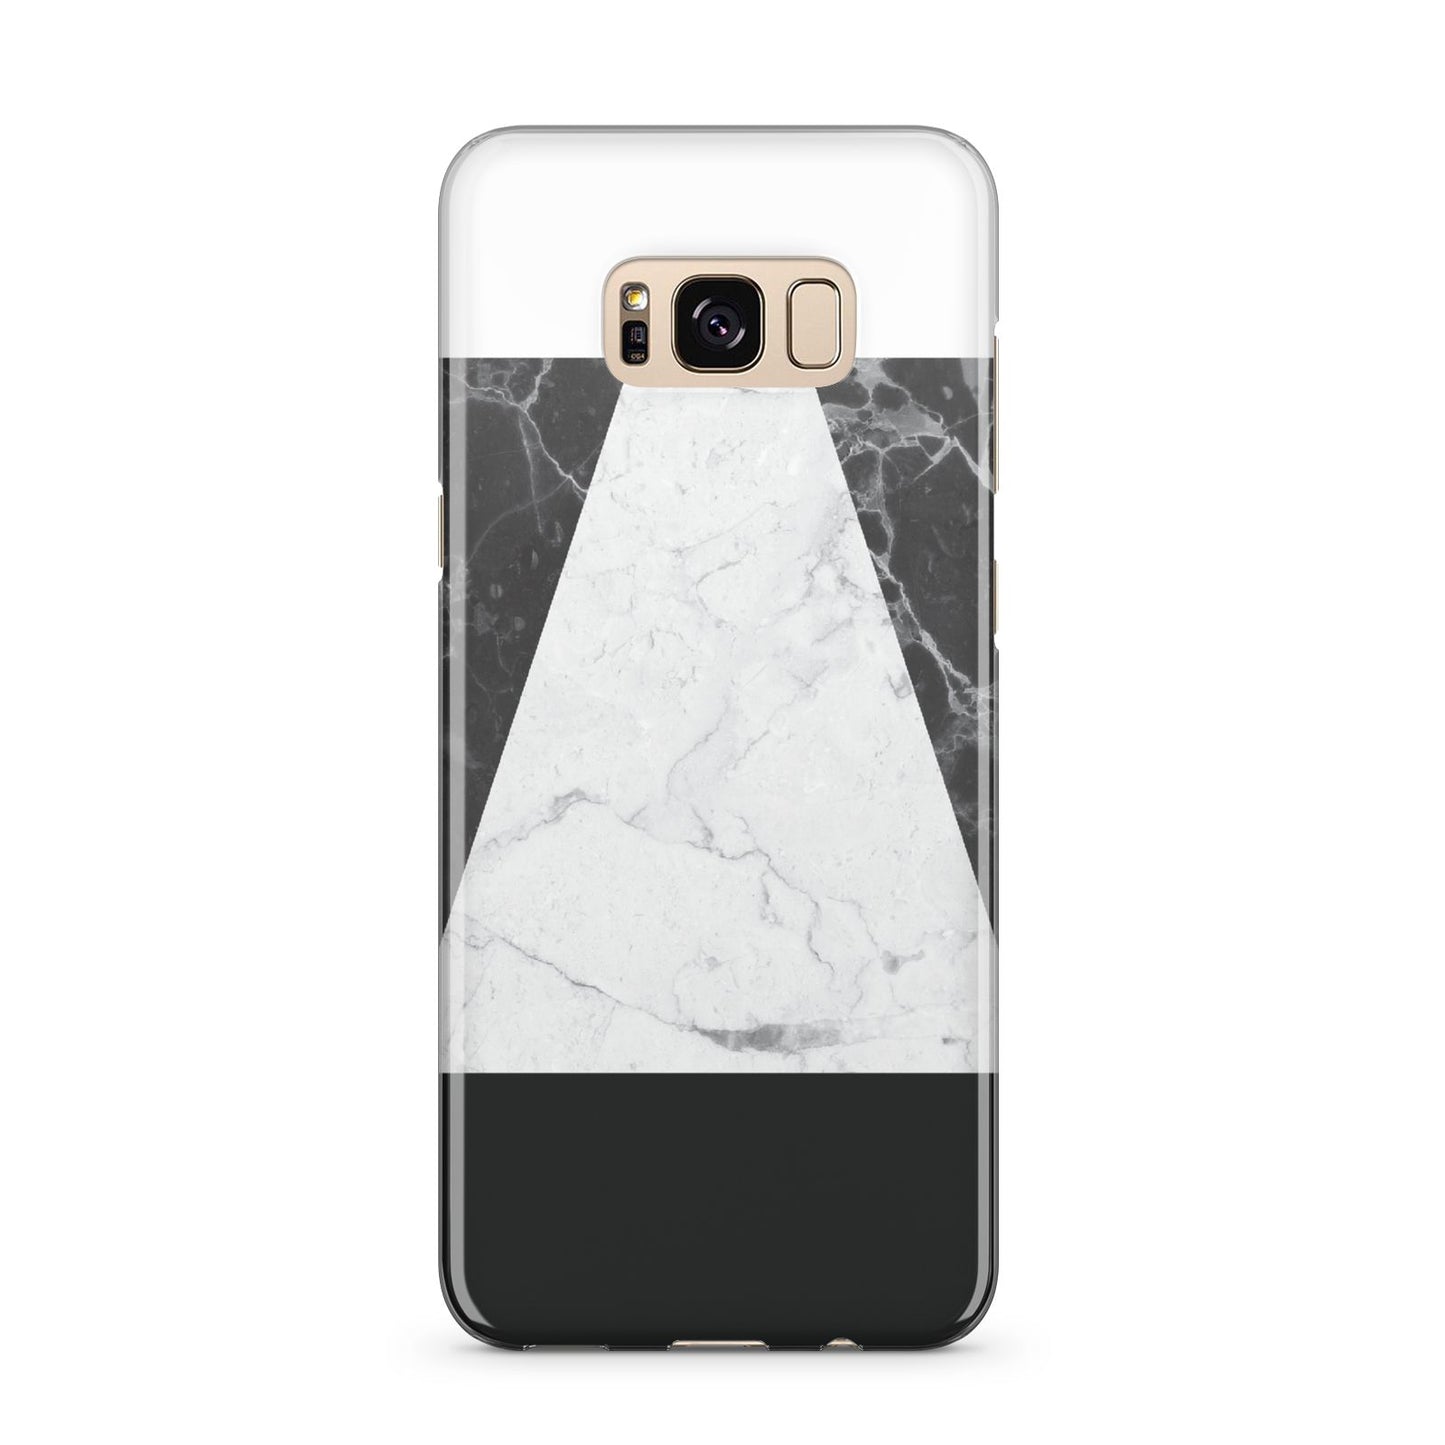 Marble White Black Samsung Galaxy S8 Plus Case